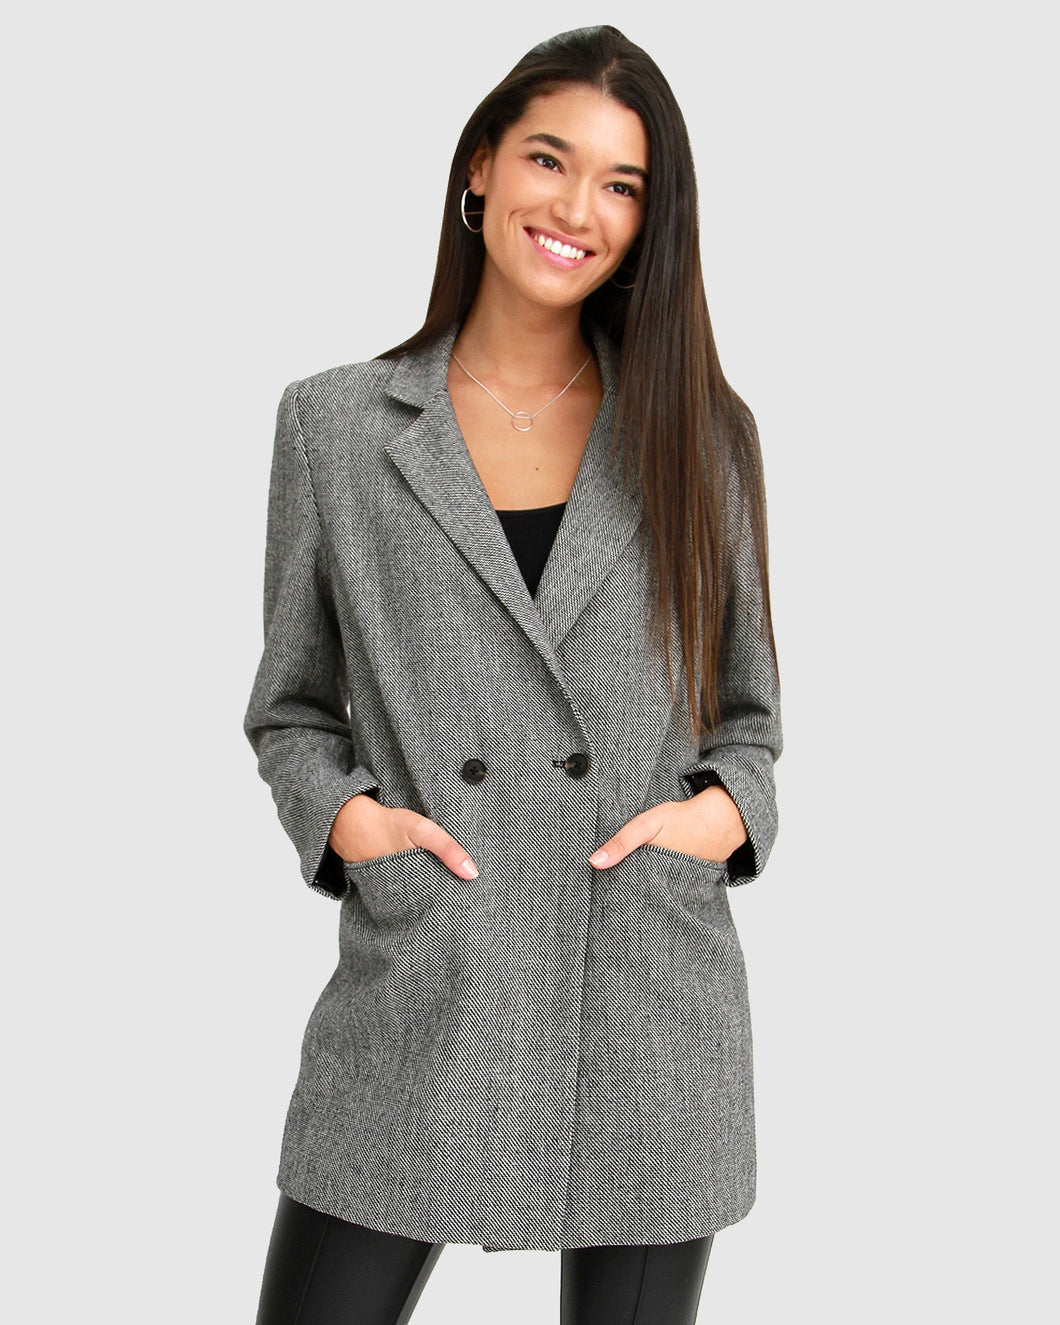 Kensington Oversized Coat - Grey